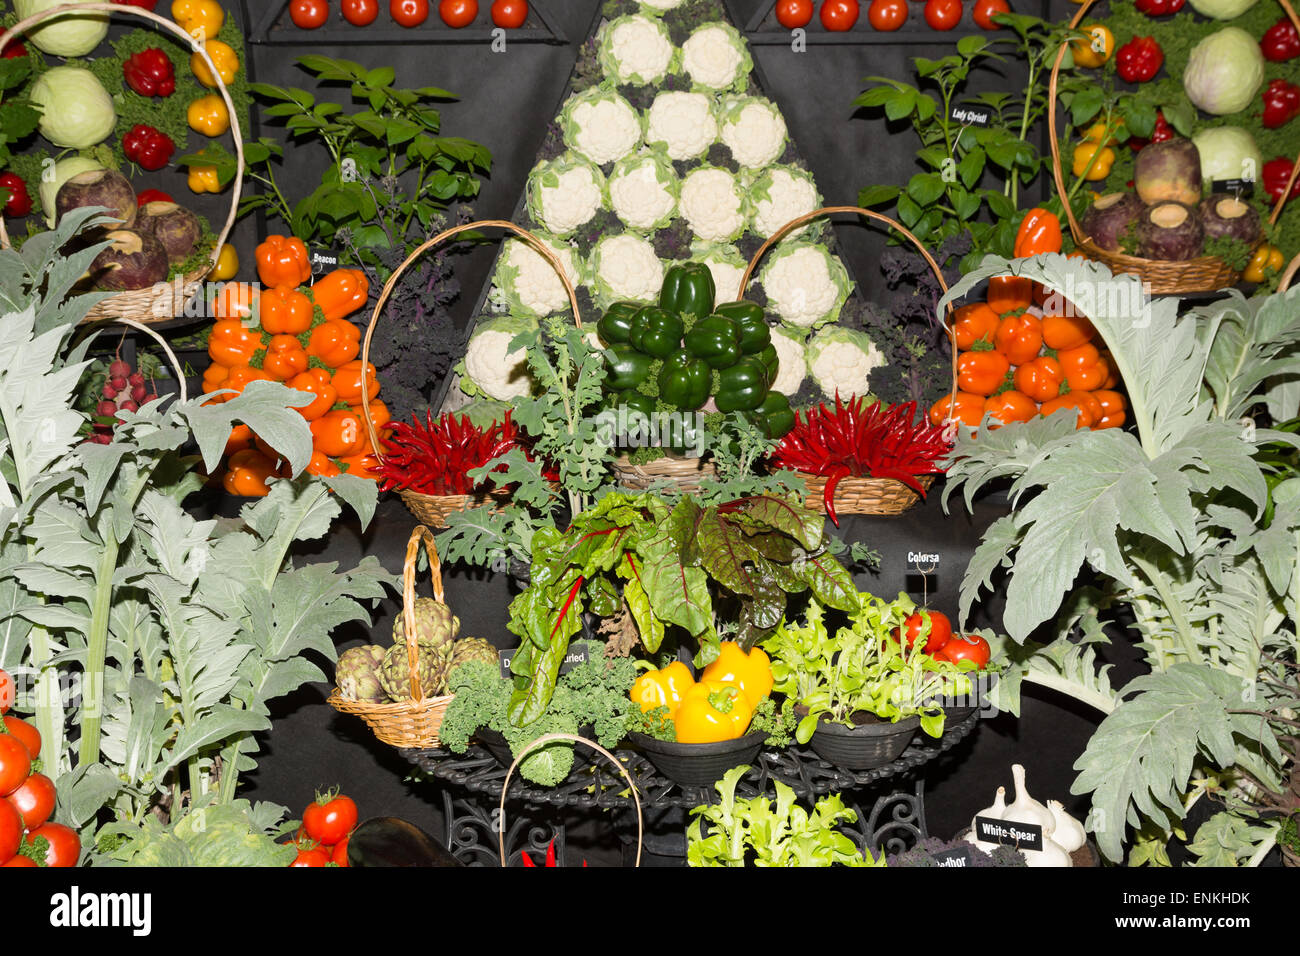 Vegetable display stand Stock Photo